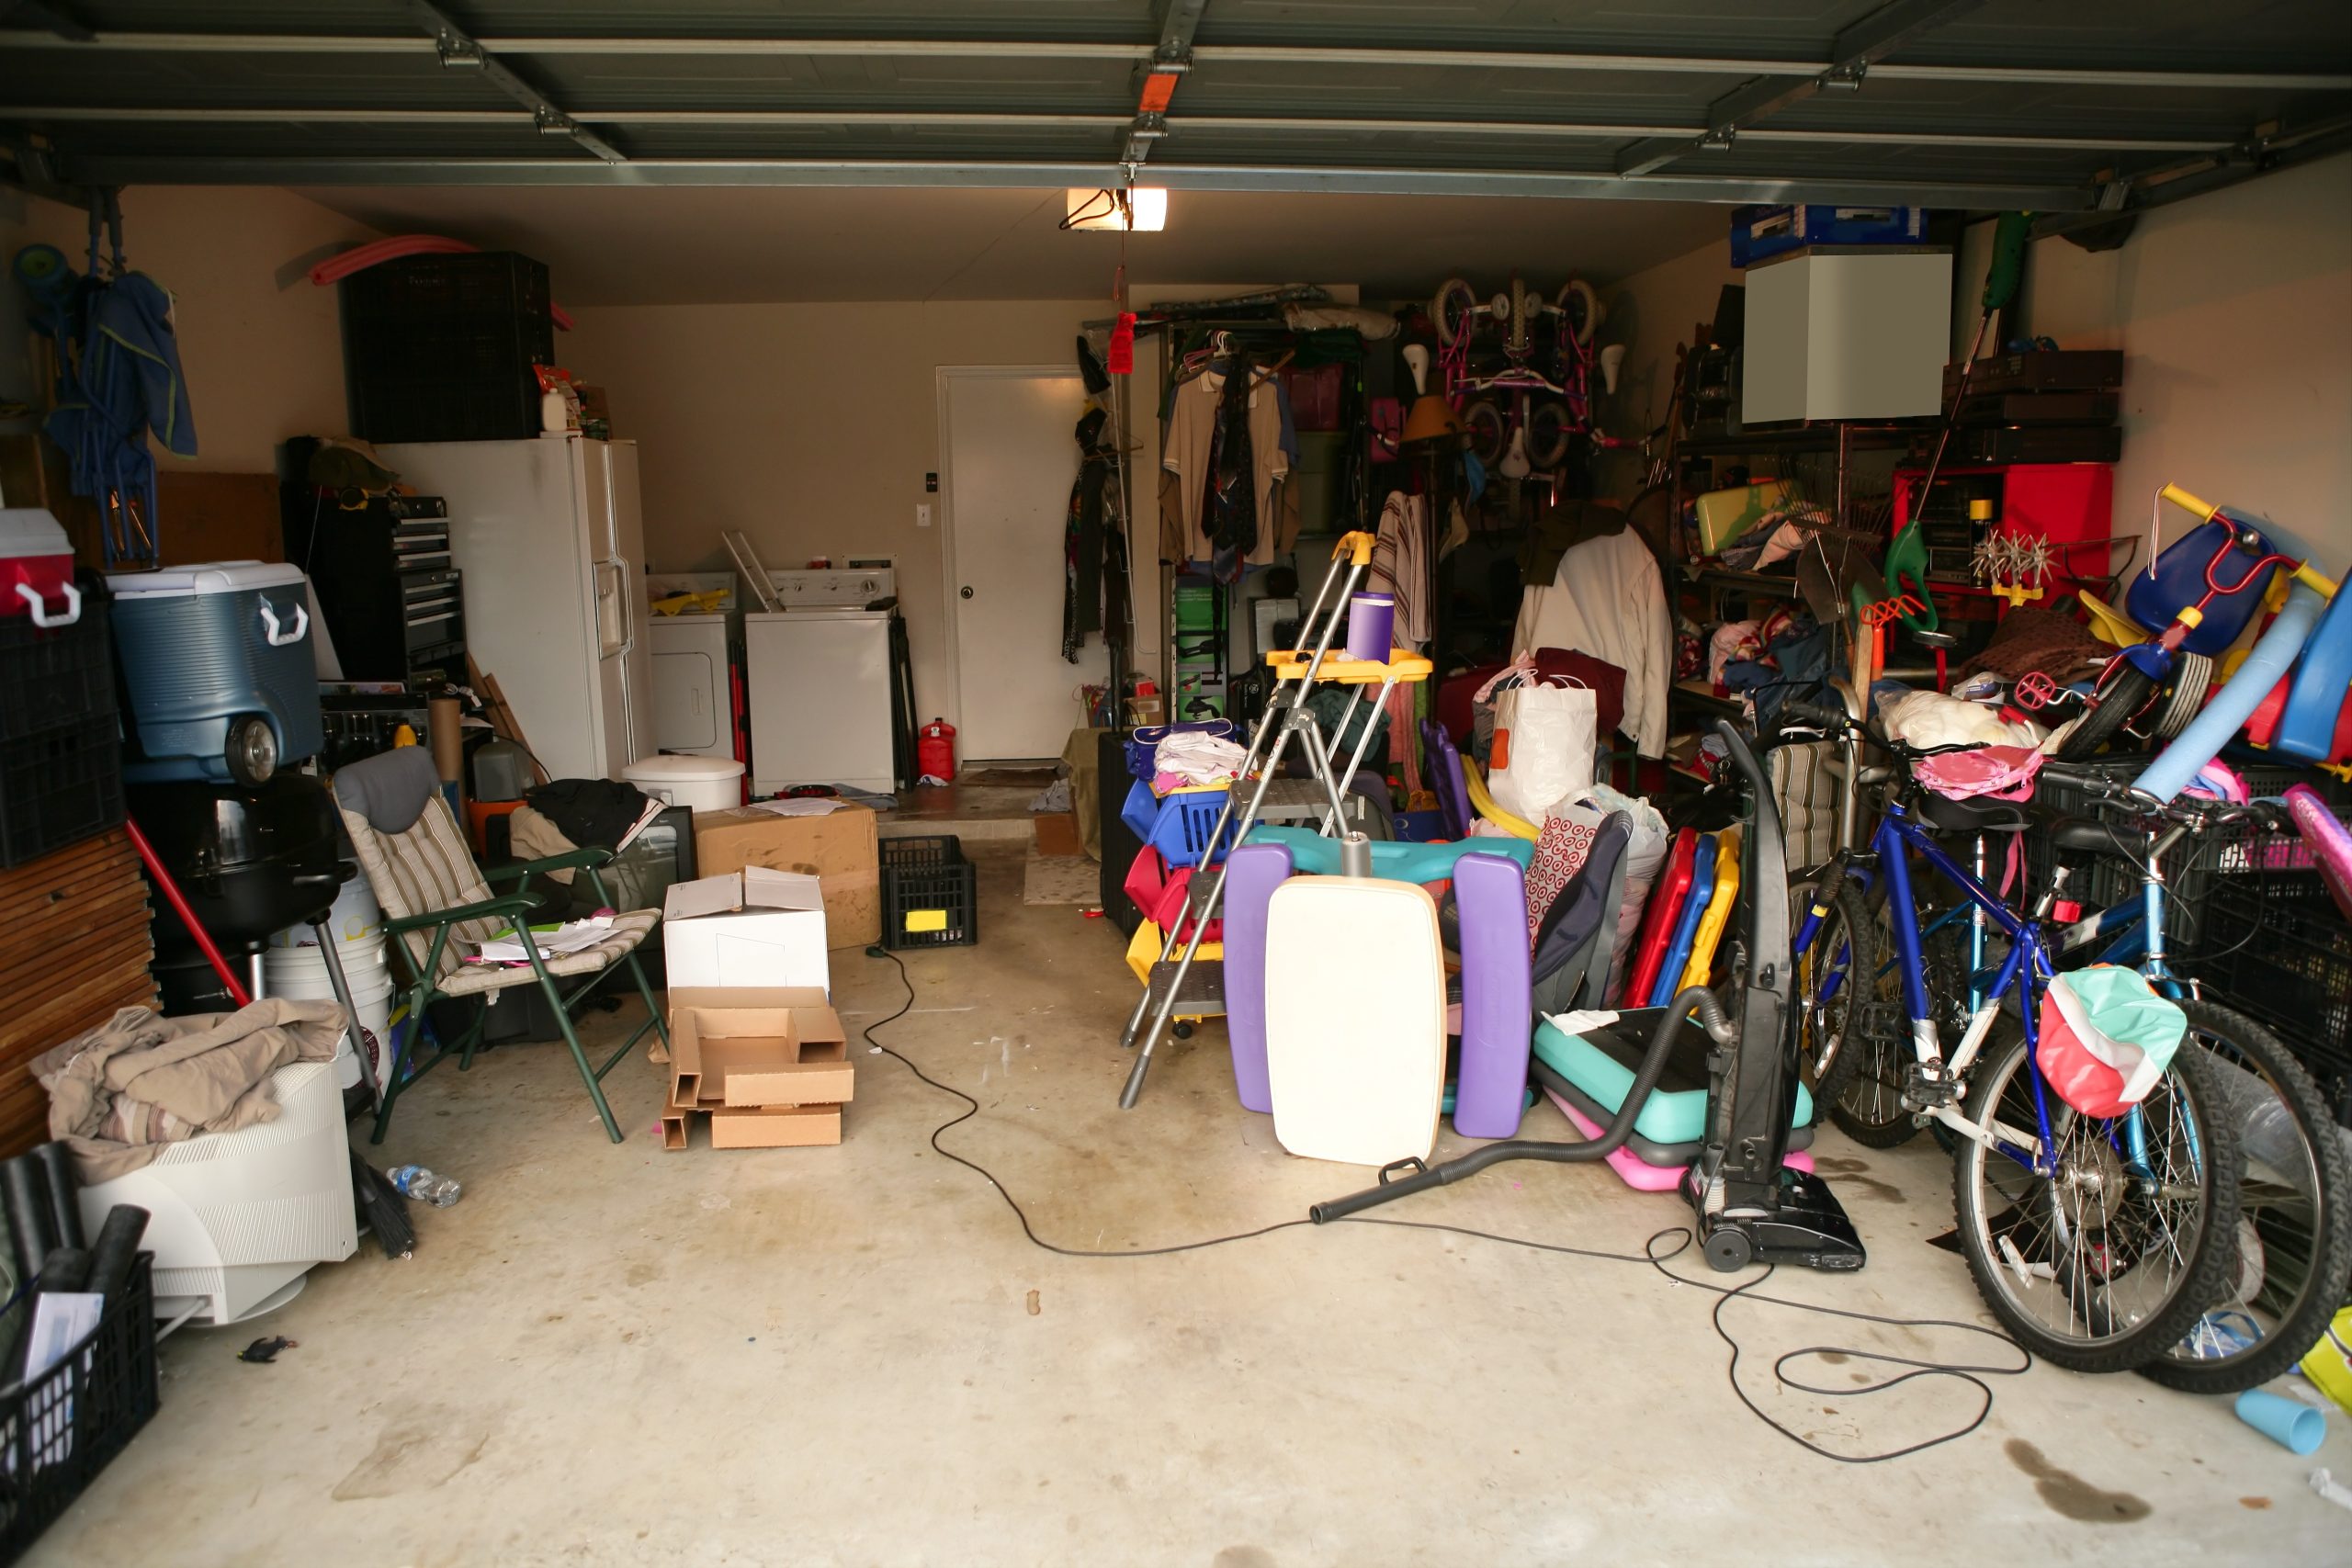 Very messy and unorganized garage with junk laying around